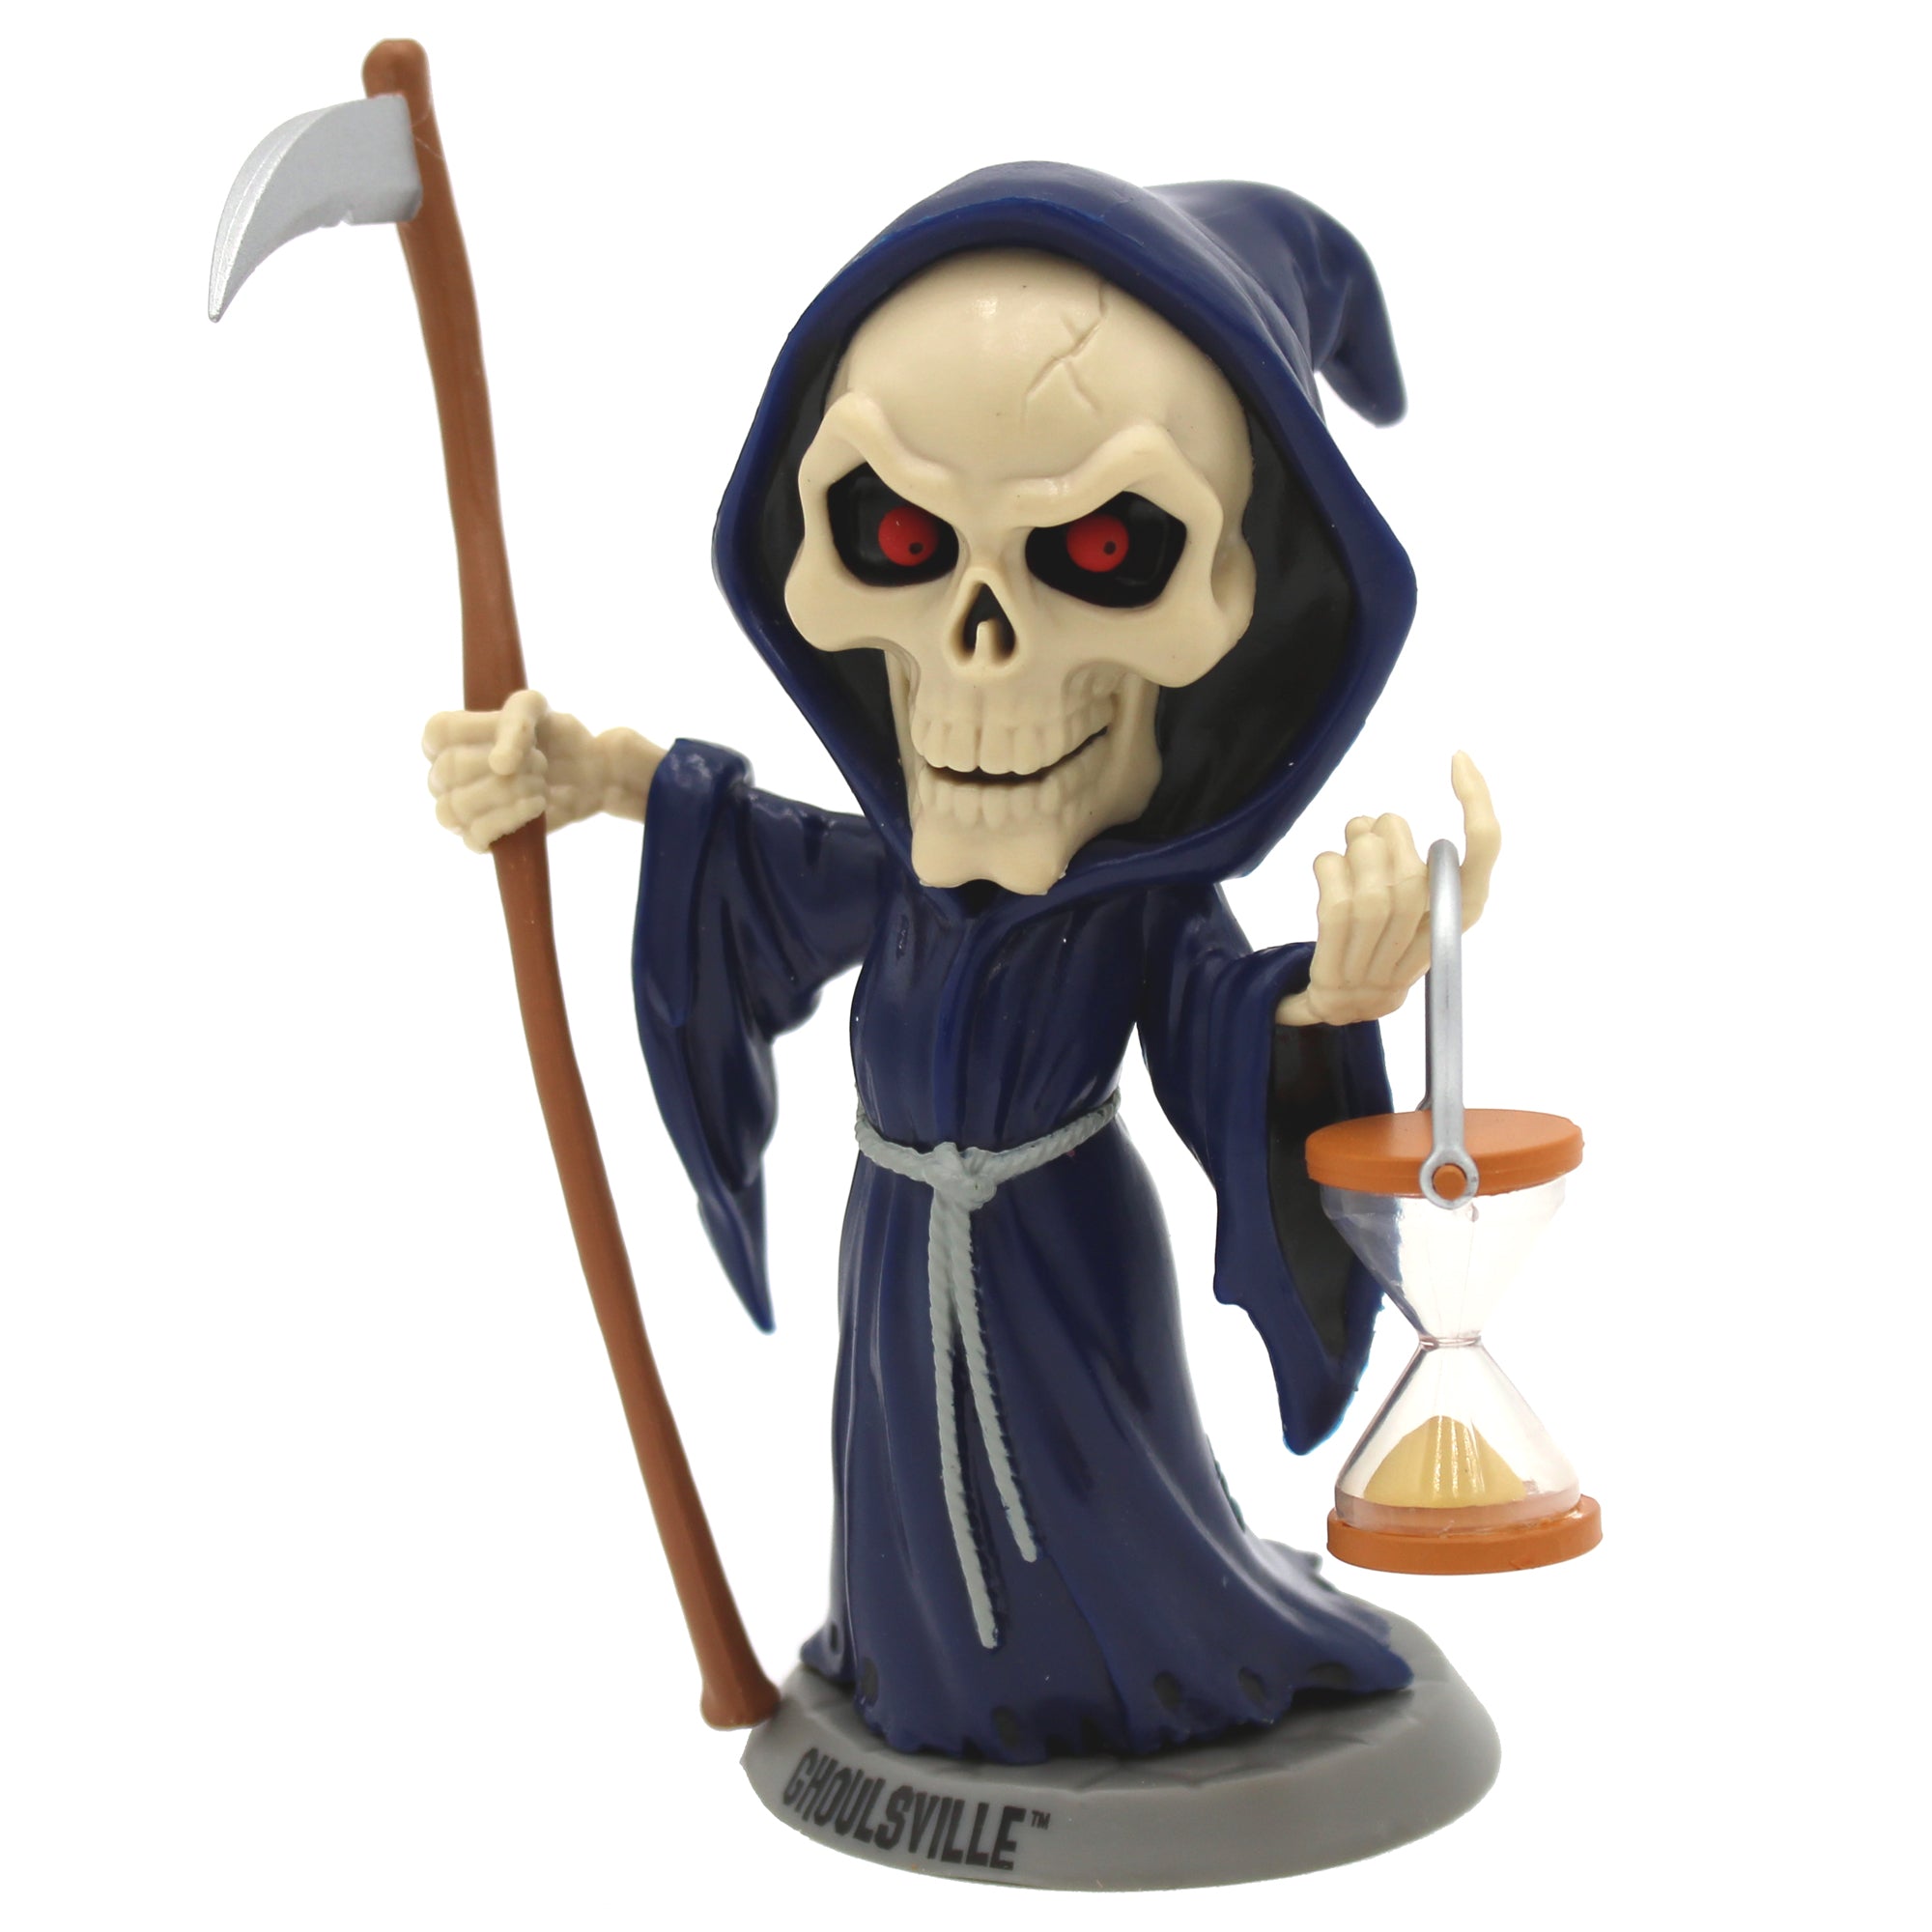 Tiny Terrors Grimm the Reaper A Violet Death Horror Figure